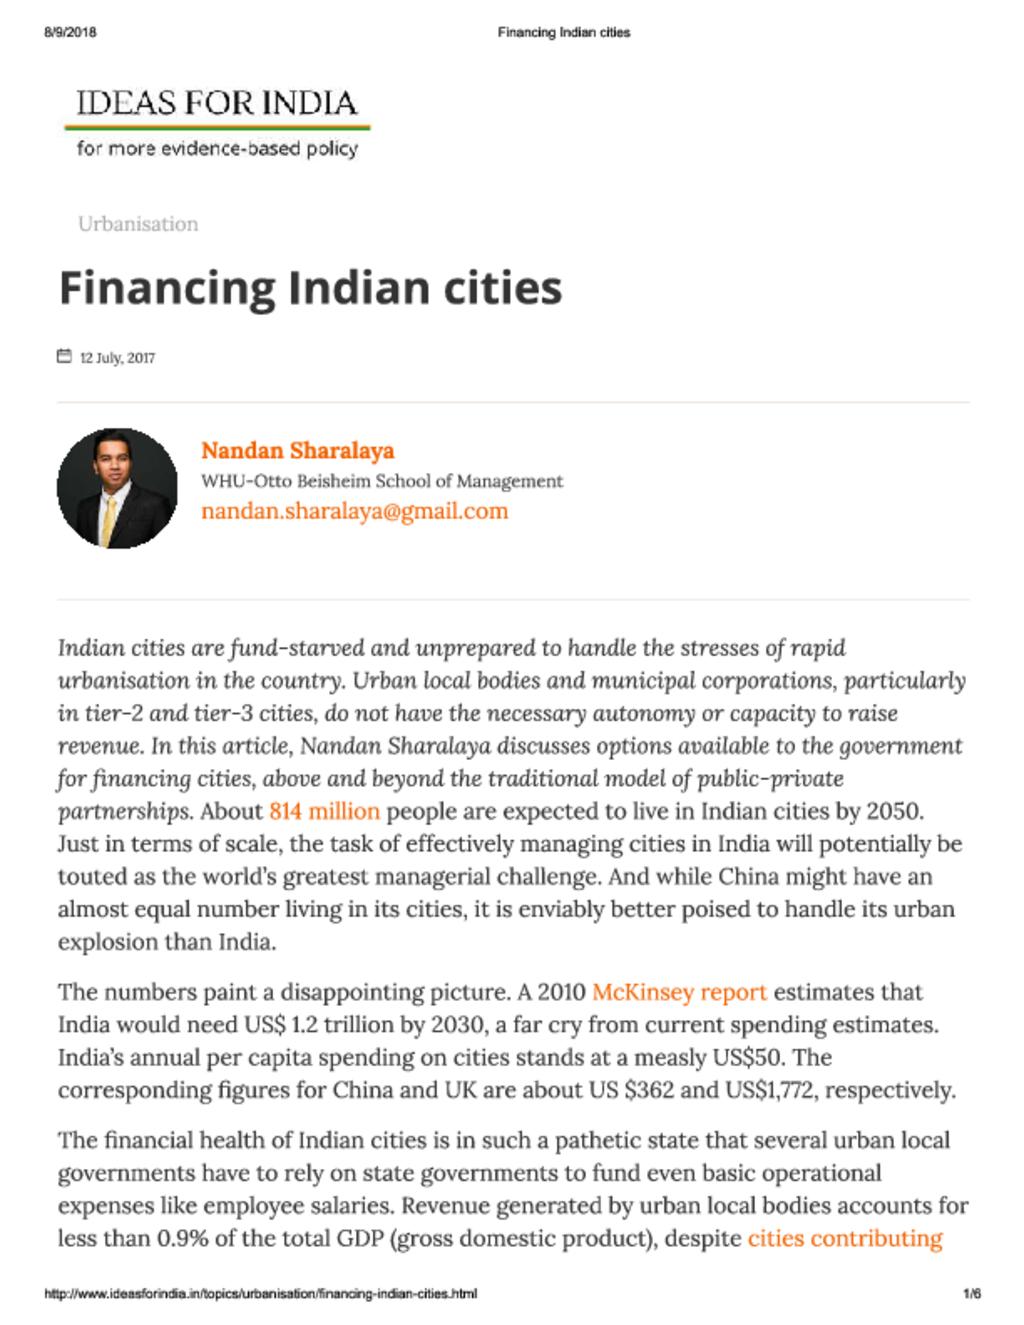 Financing Indian Cities